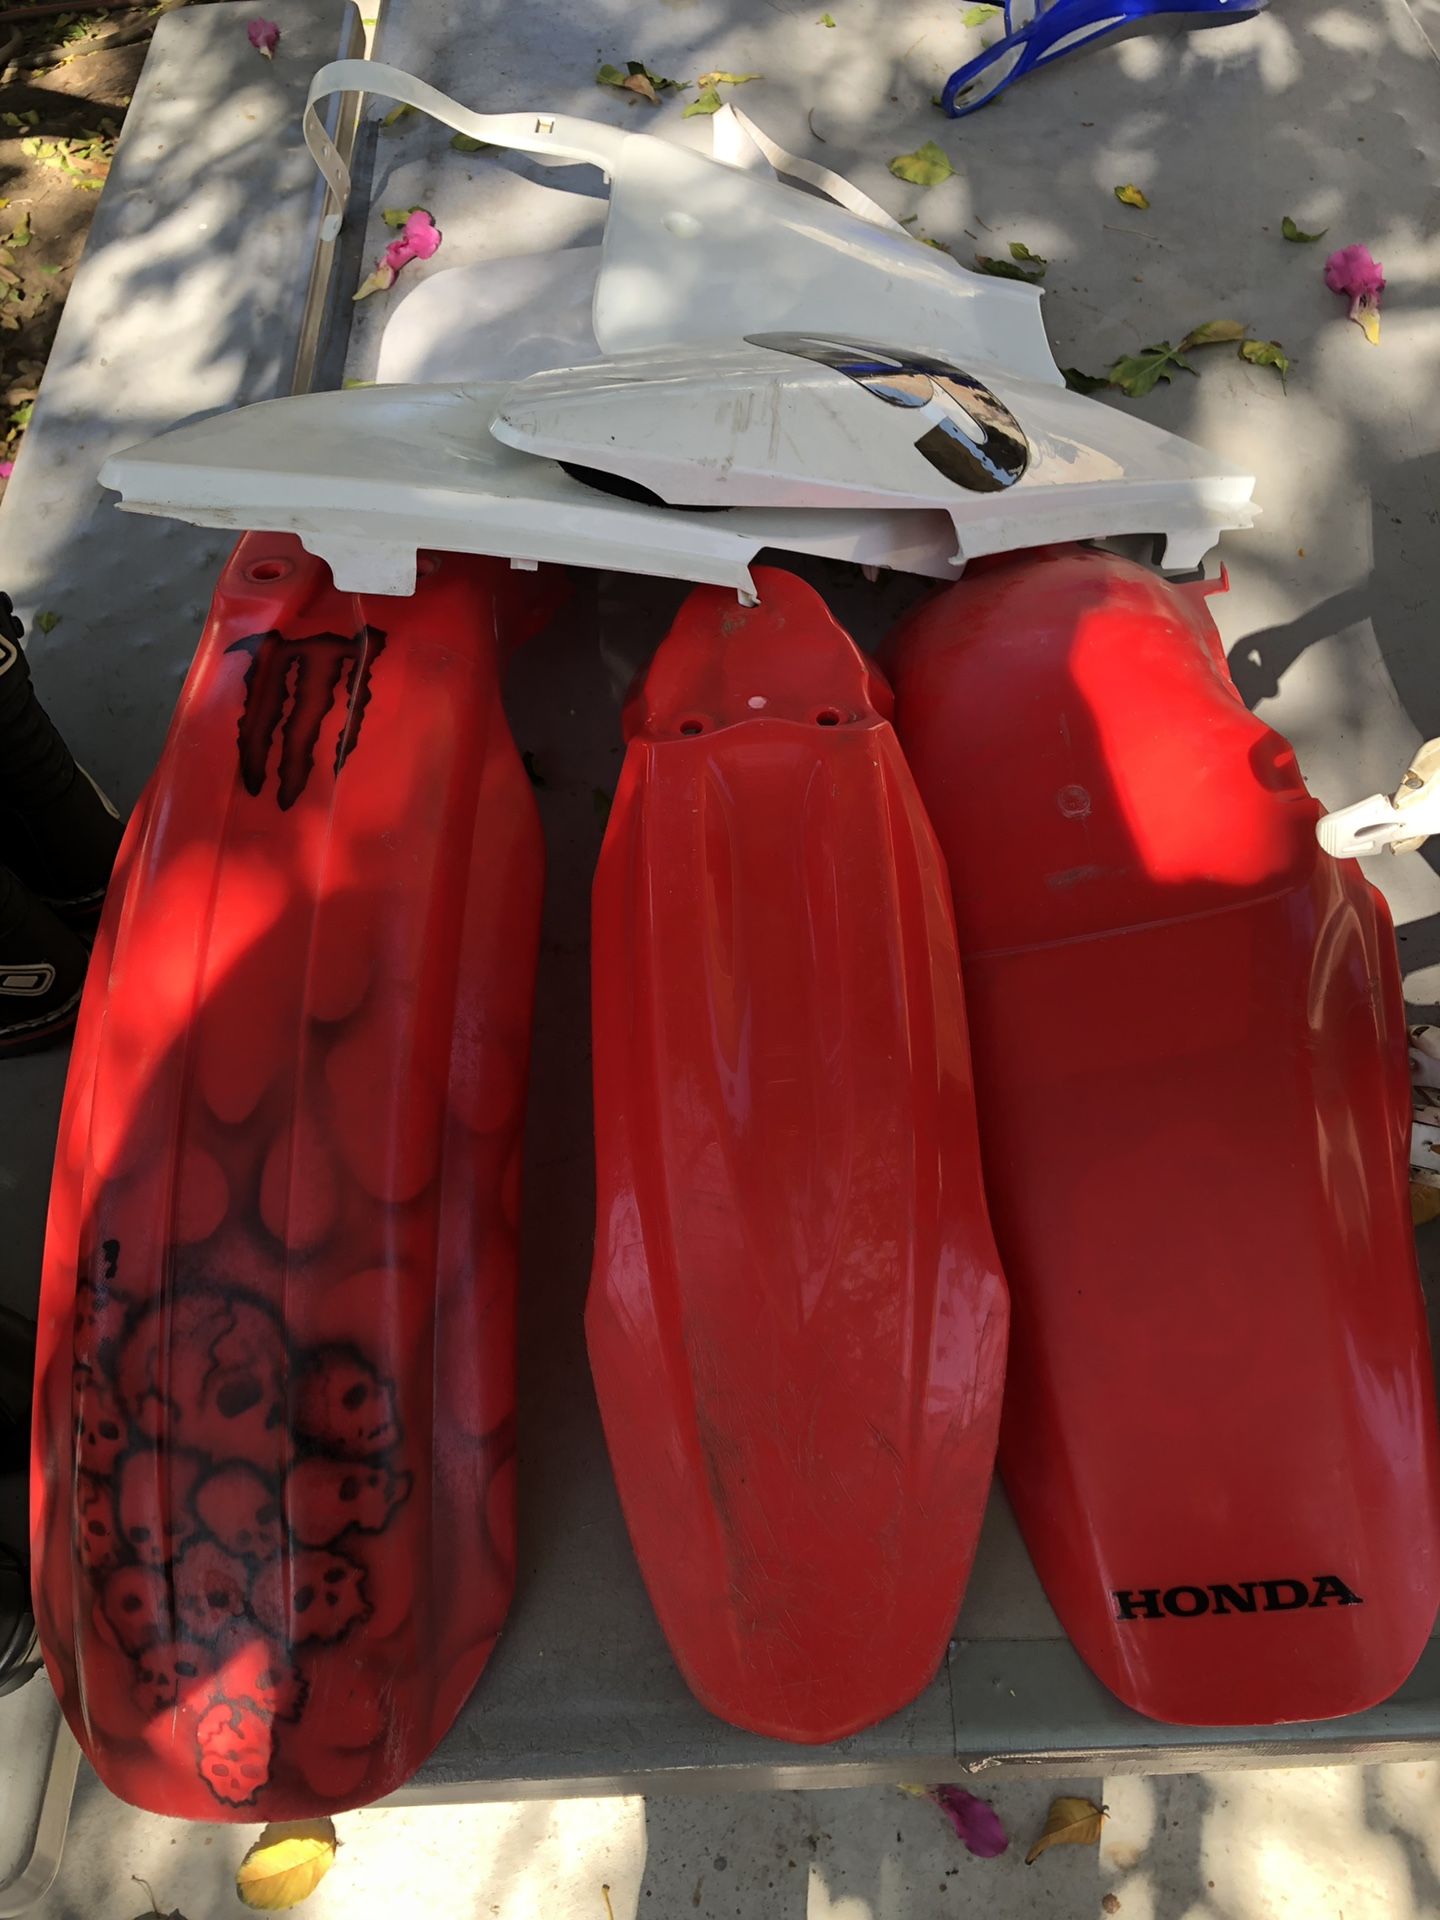 Honda dirt bike plastics